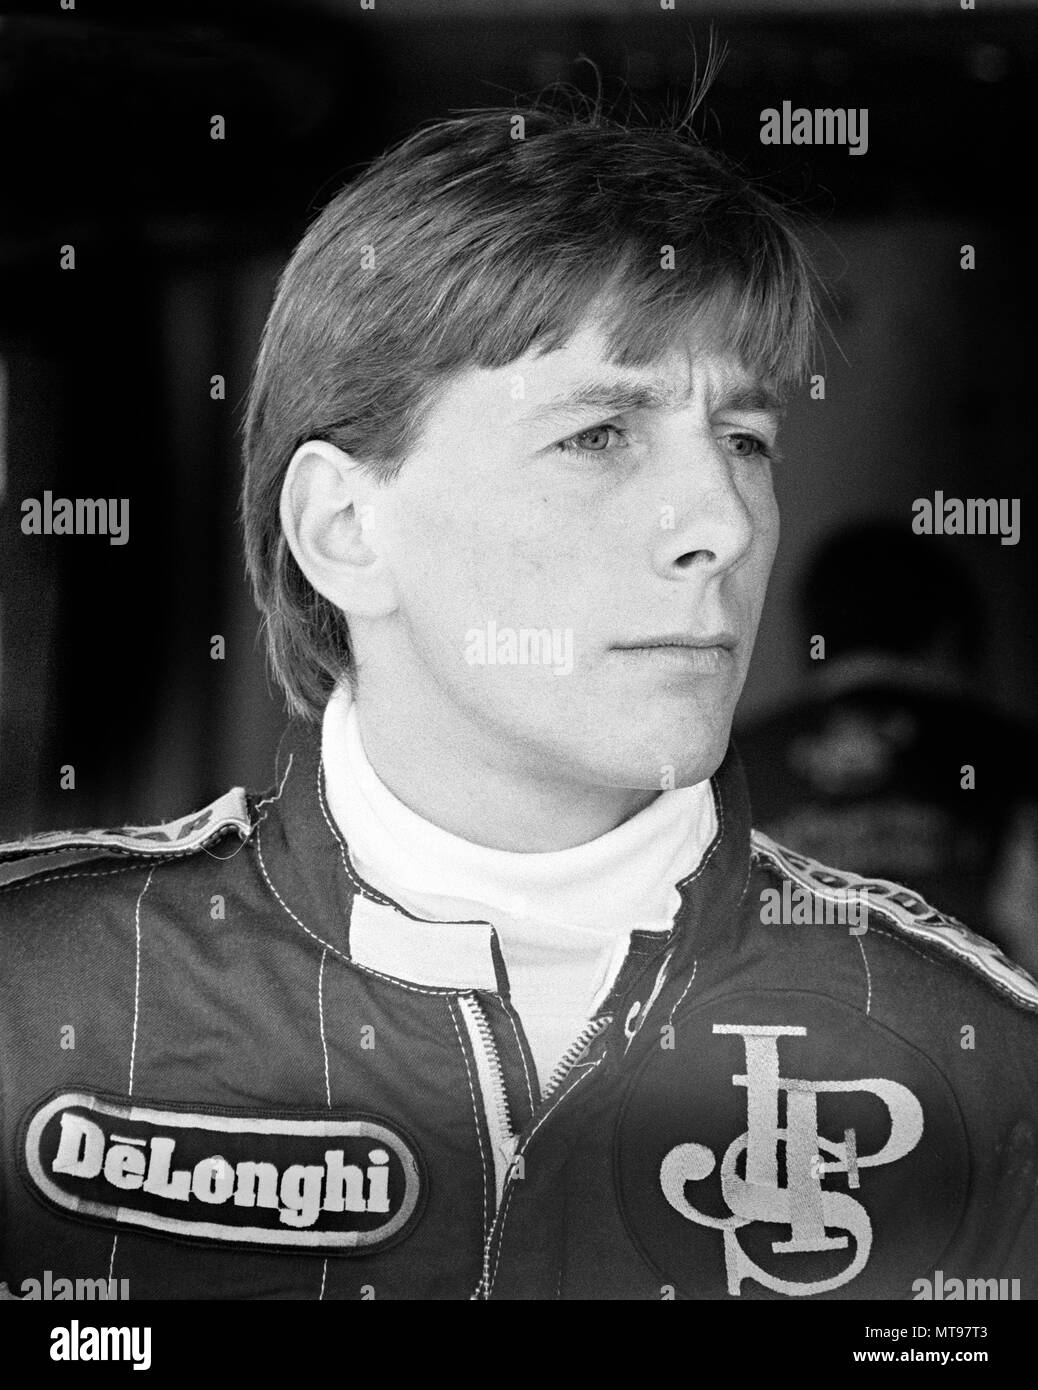 Johnny Dumfries At The 1986 British Grand Prix Stock Photo Alamy